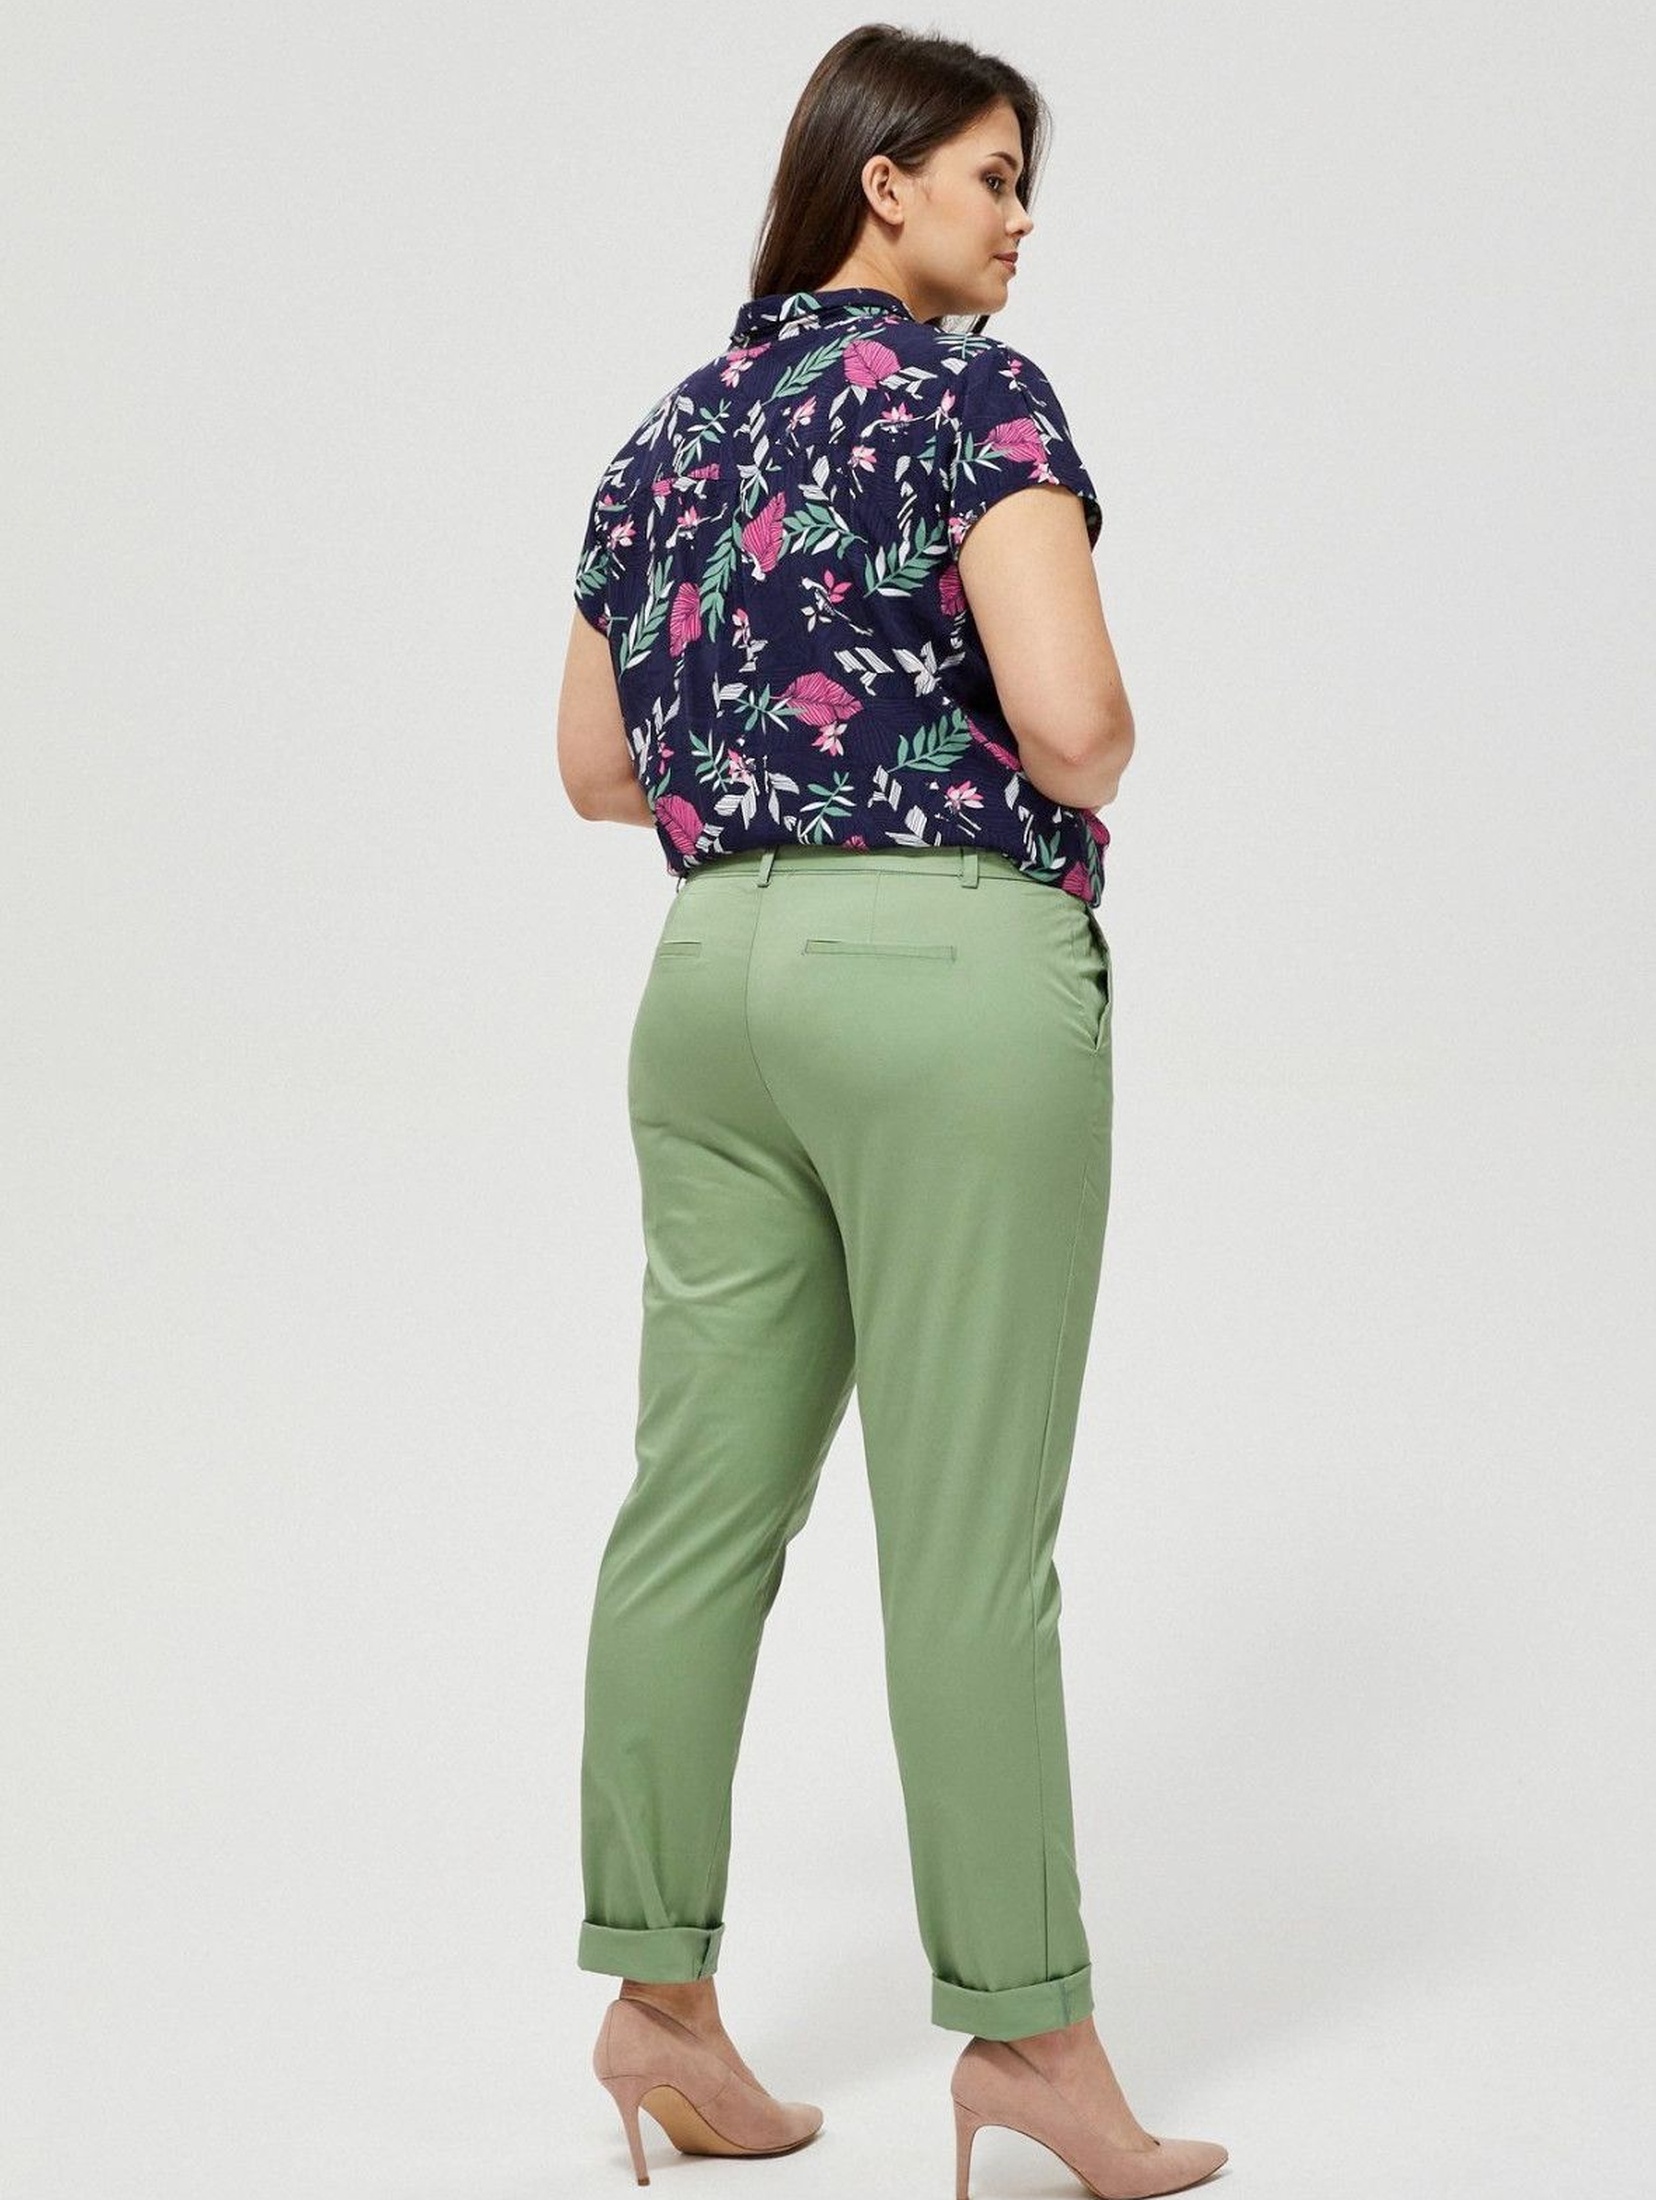 Spodnie damskie typu chinos- khaki